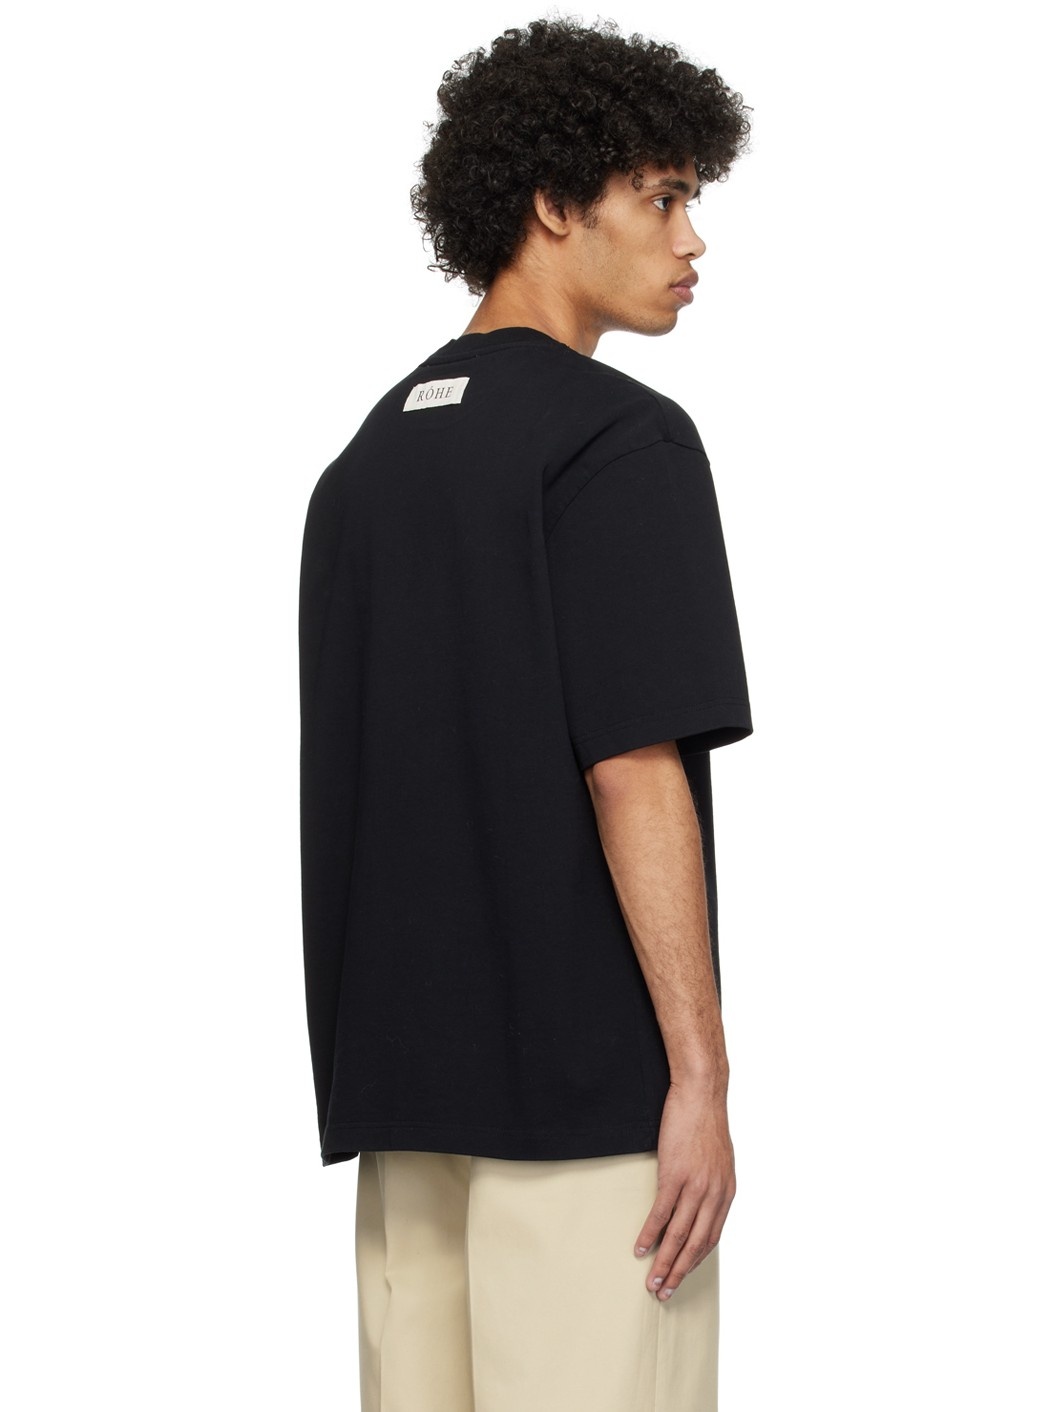 Black Oversized T-Shirt - 3